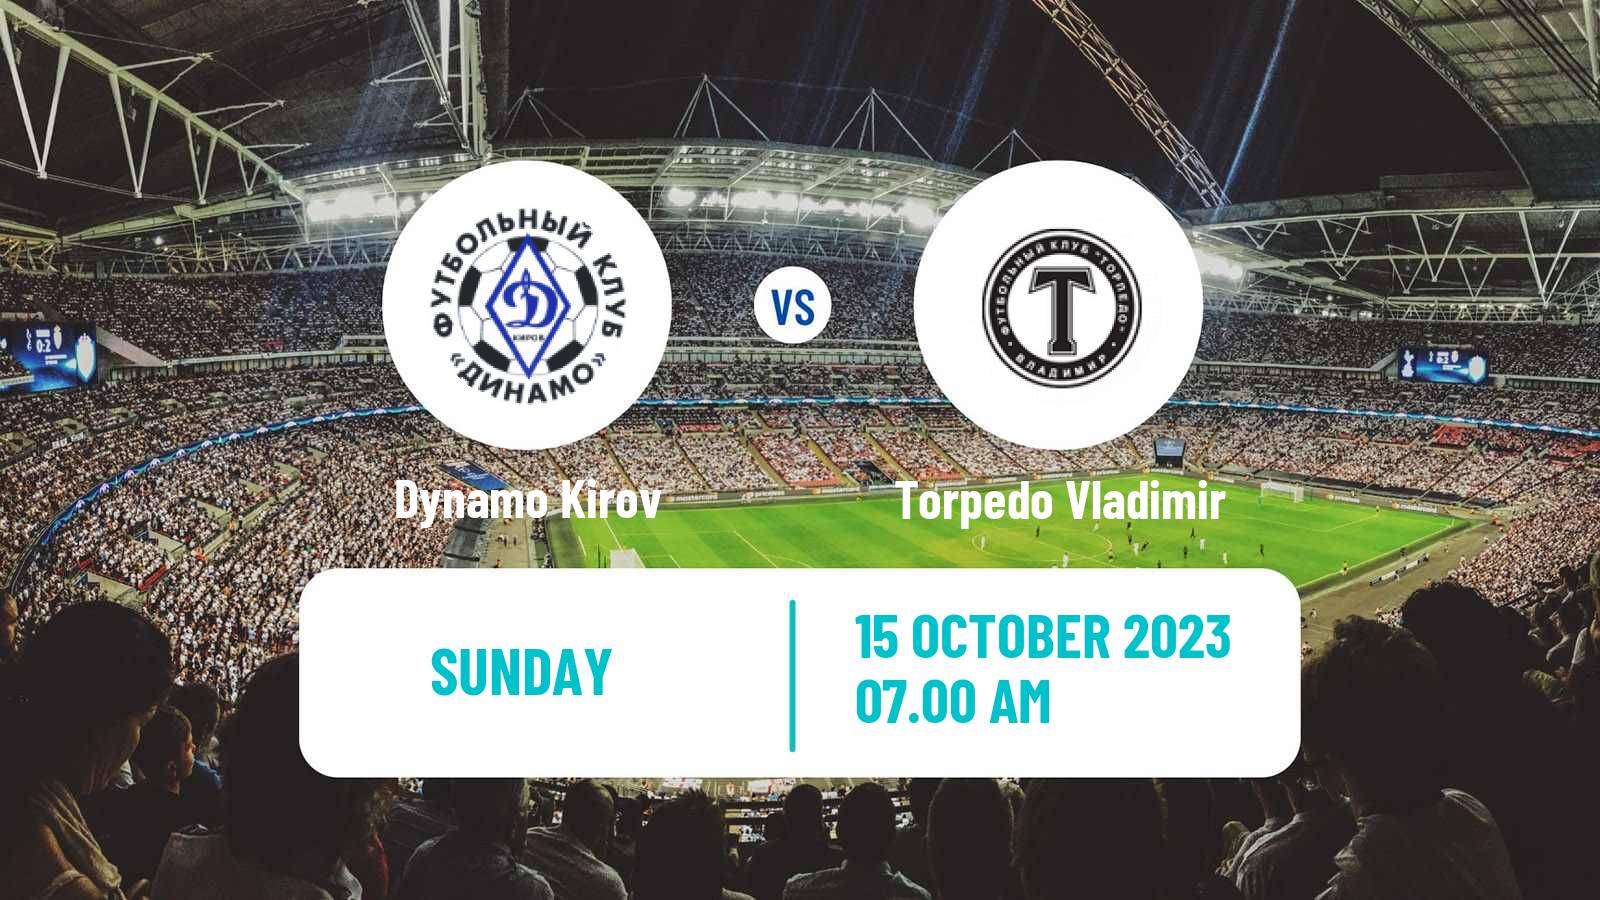 Soccer FNL 2 Division B Group 2 Dynamo Kirov - Torpedo Vladimir